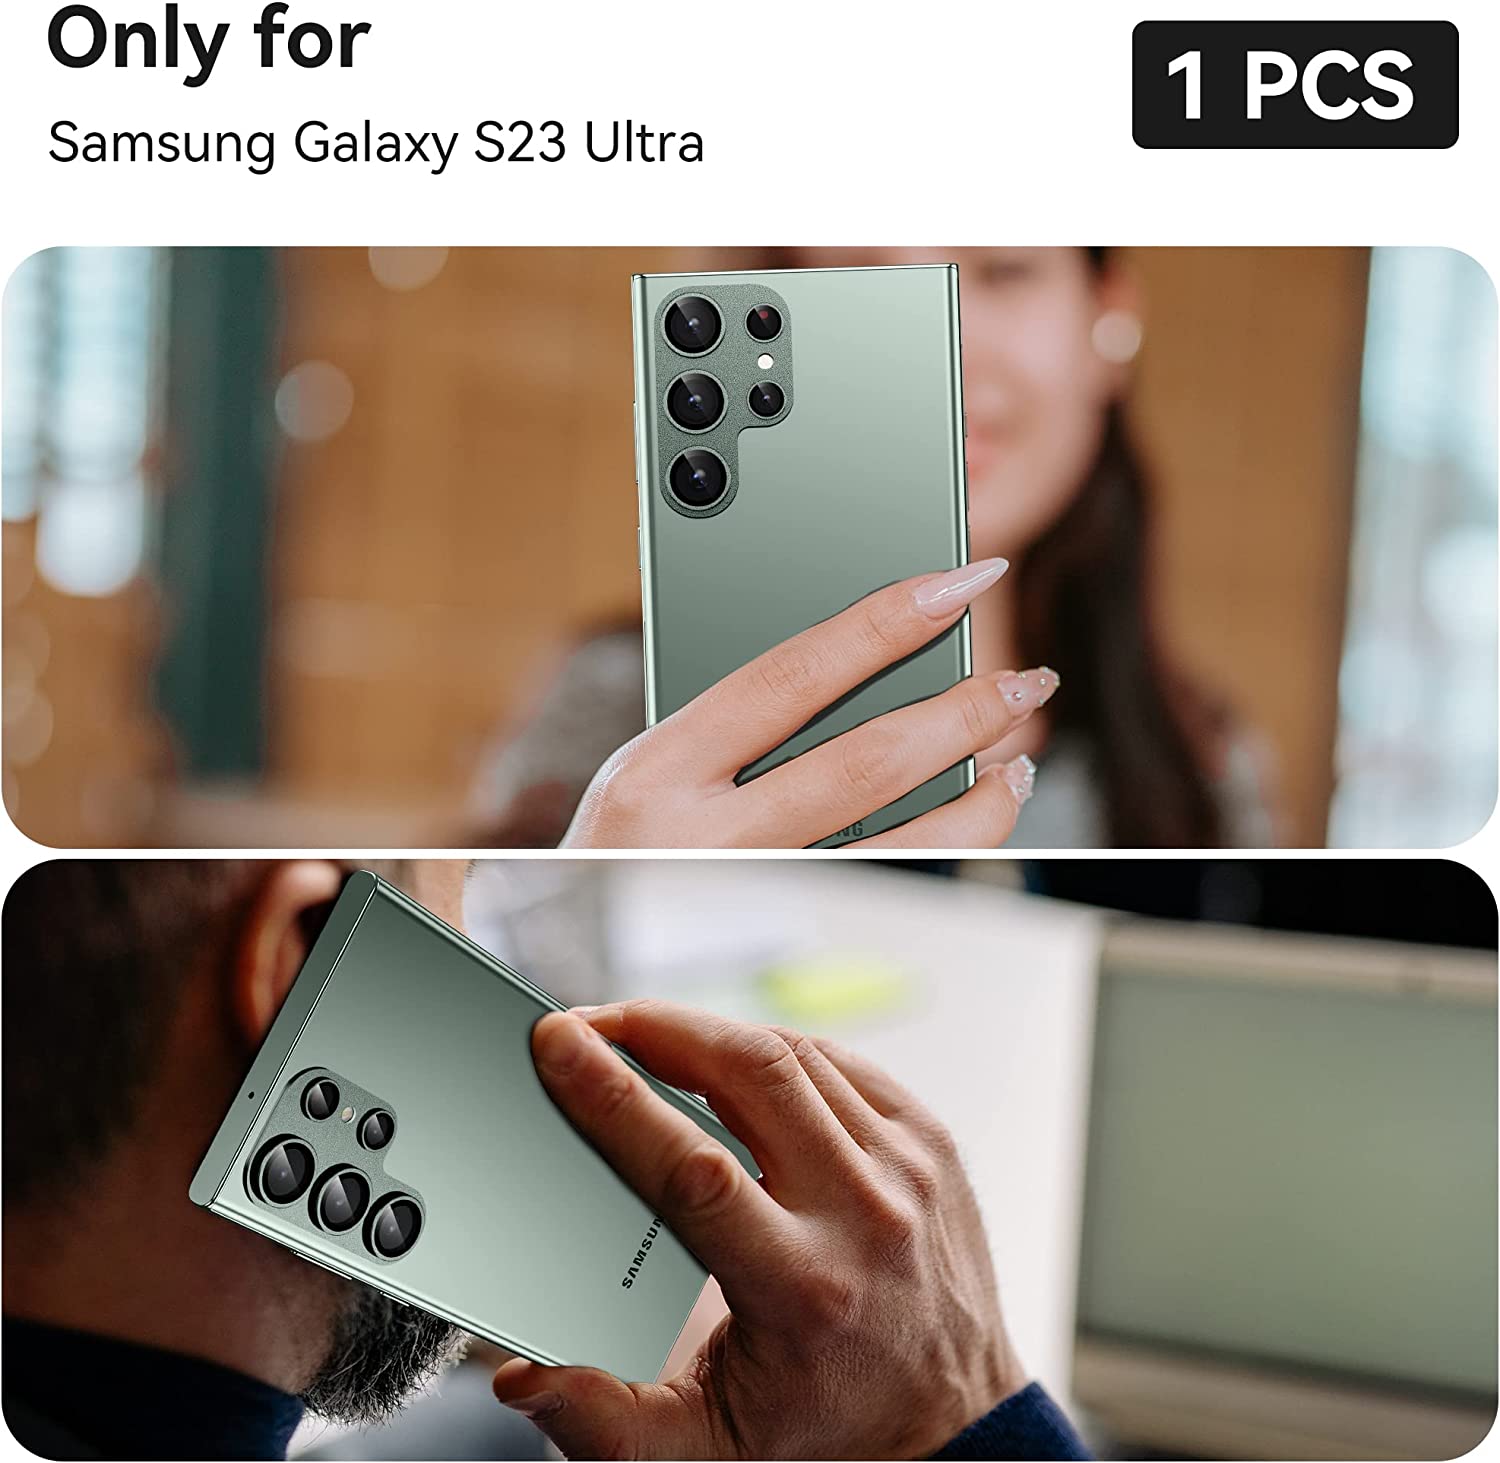 Samsung Galaxy S23 Ultra Camera: Samsung Galaxy S23 Ultra to be